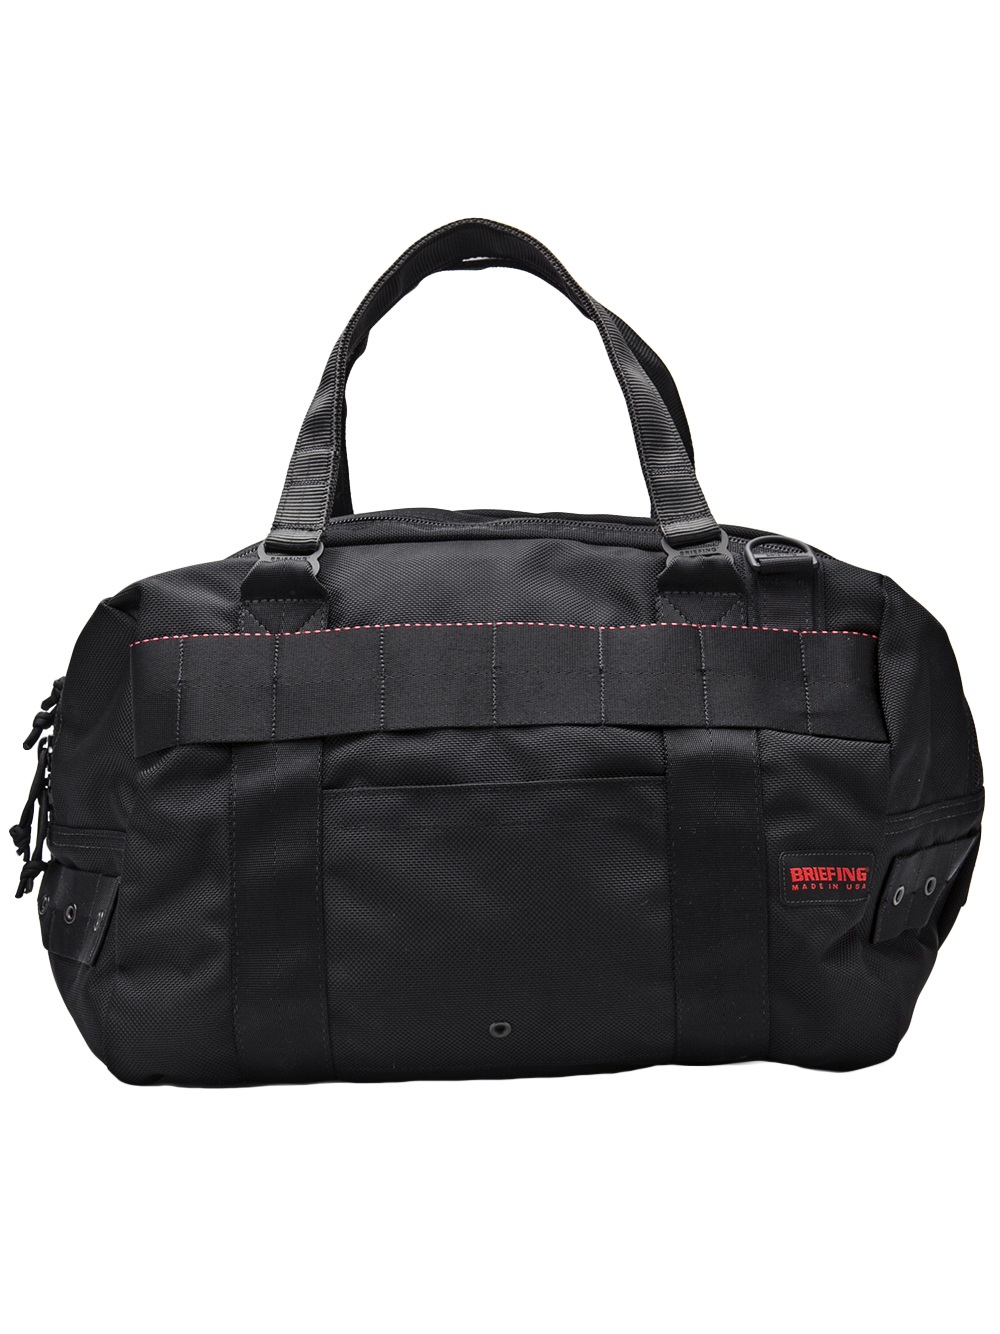 Briefing Dual Duffle Bag in Black for Men - Lyst